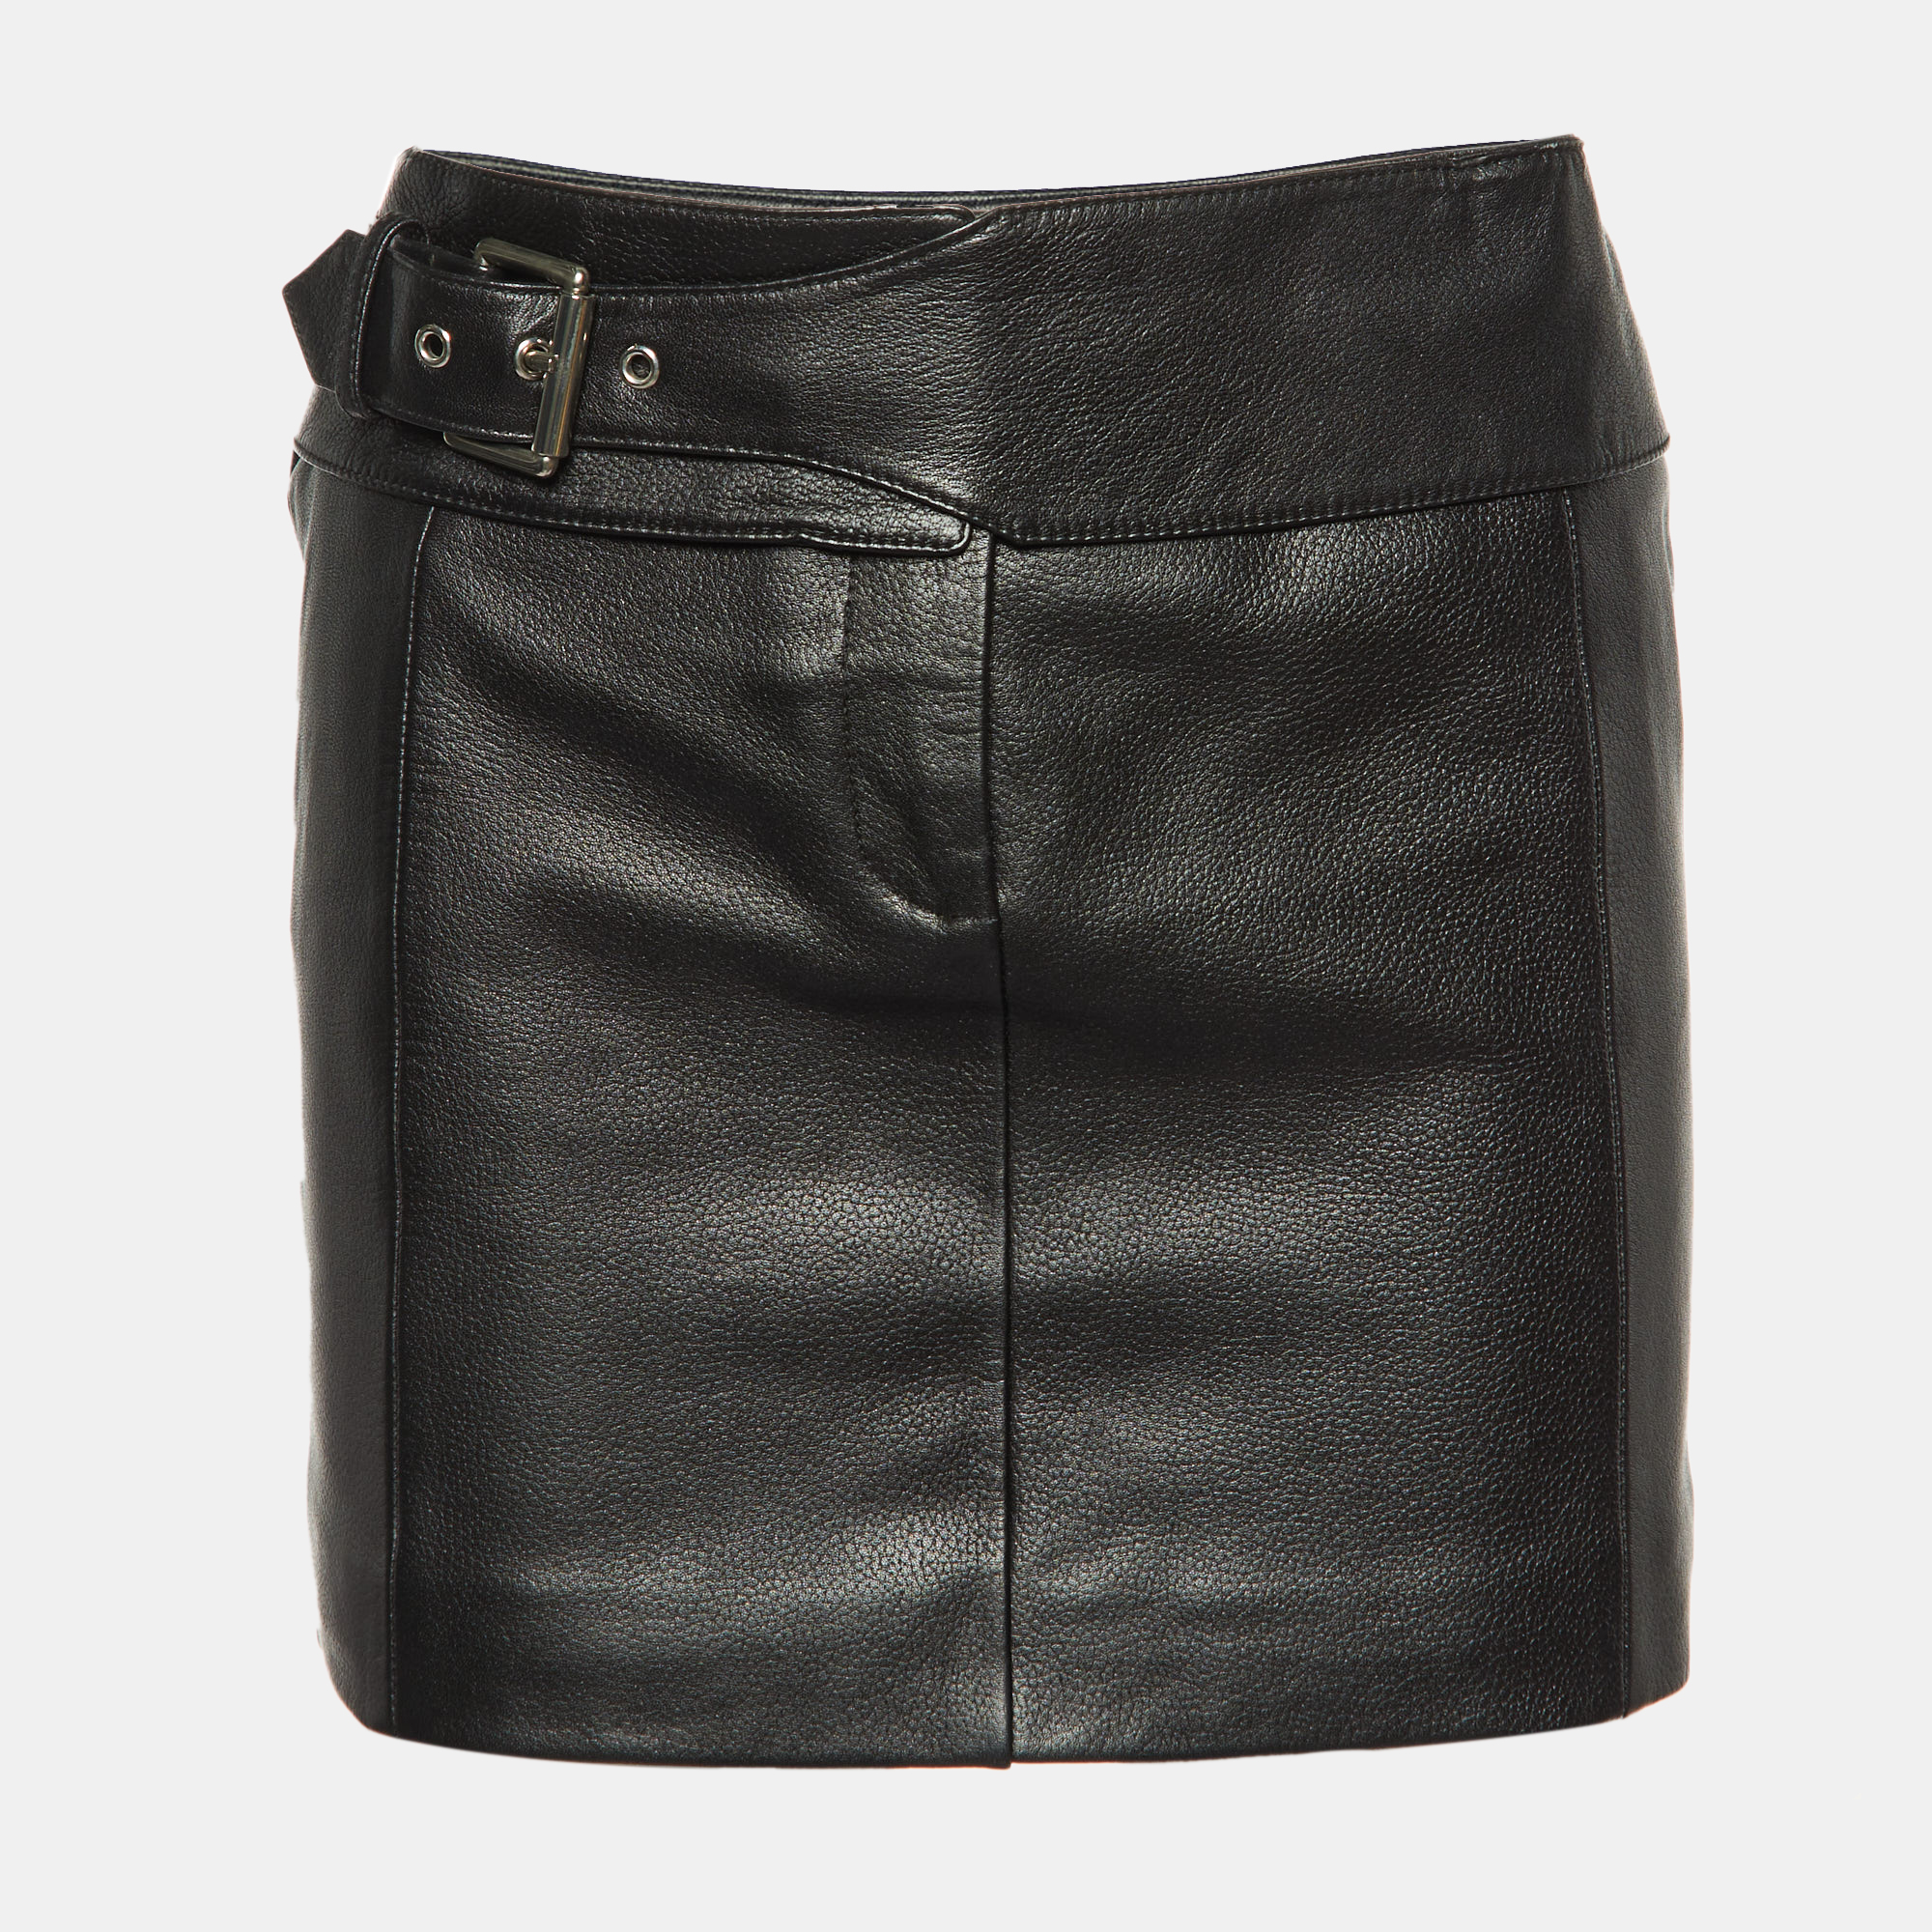 Versus versace black leather mini skirt xs